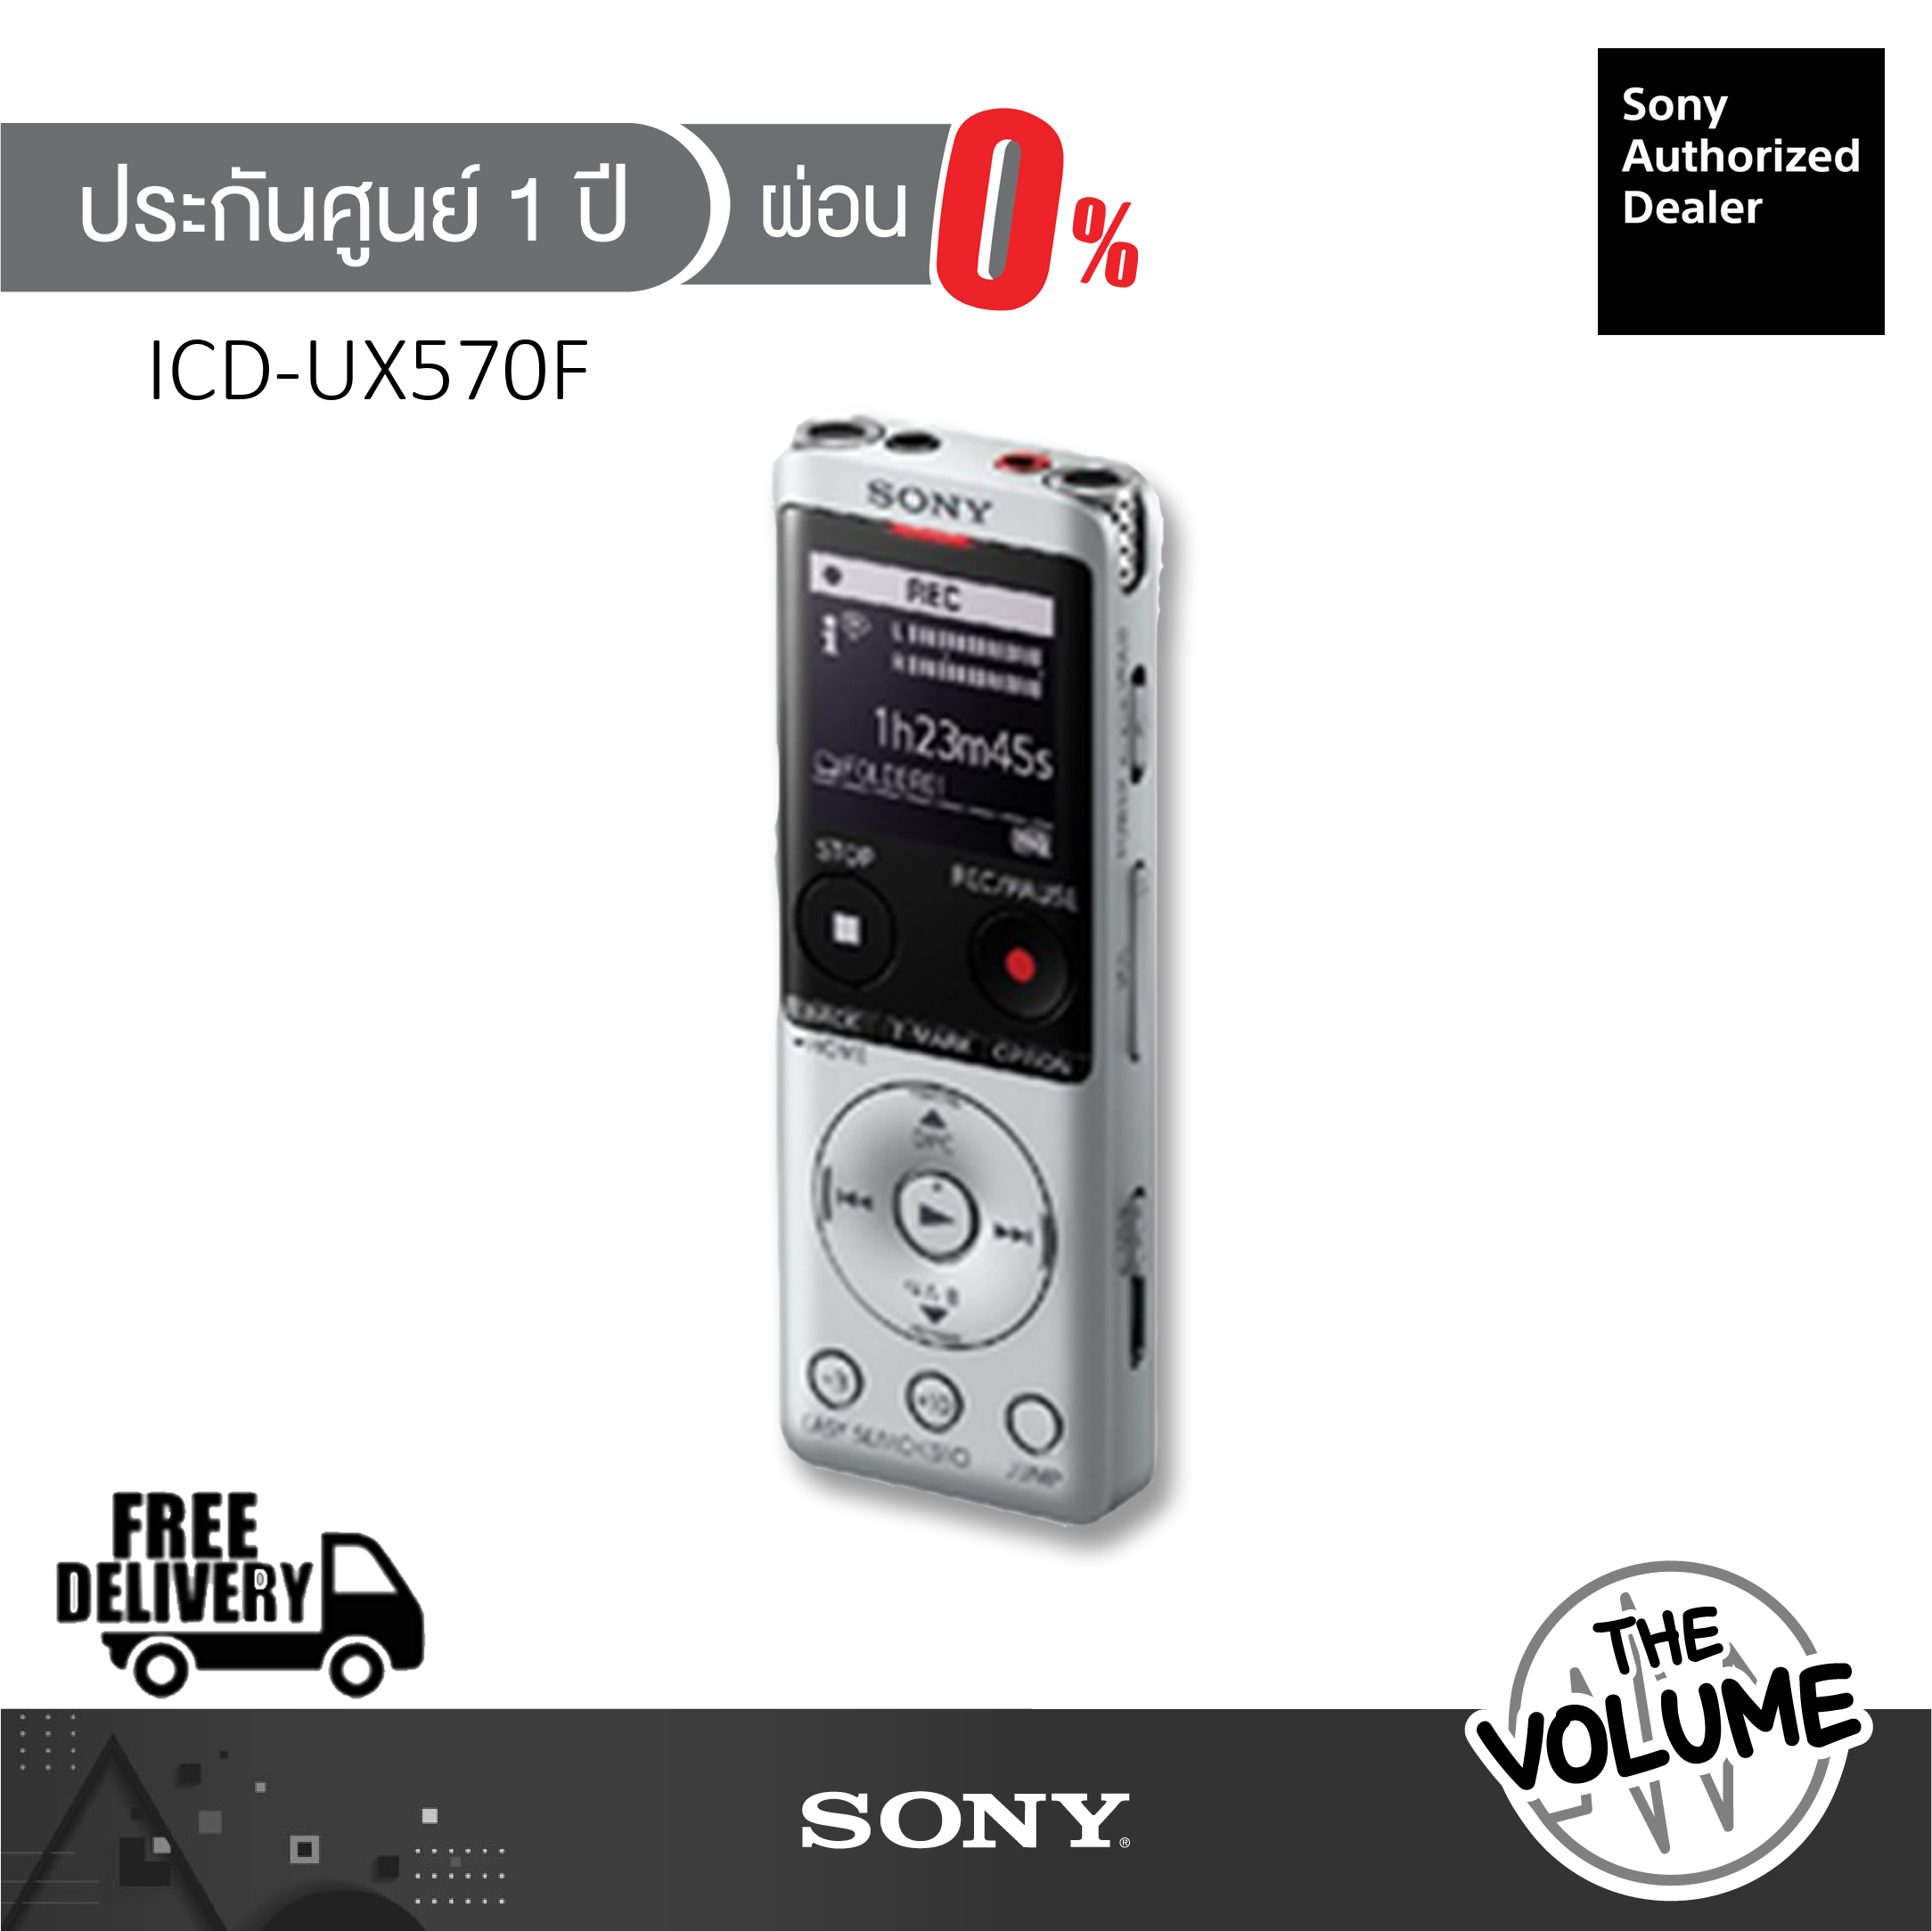 Sony ICD-UX570F (Silver) 4 GB Digital Voice Recorder ประกันศูนย์ Sony 1 ปี